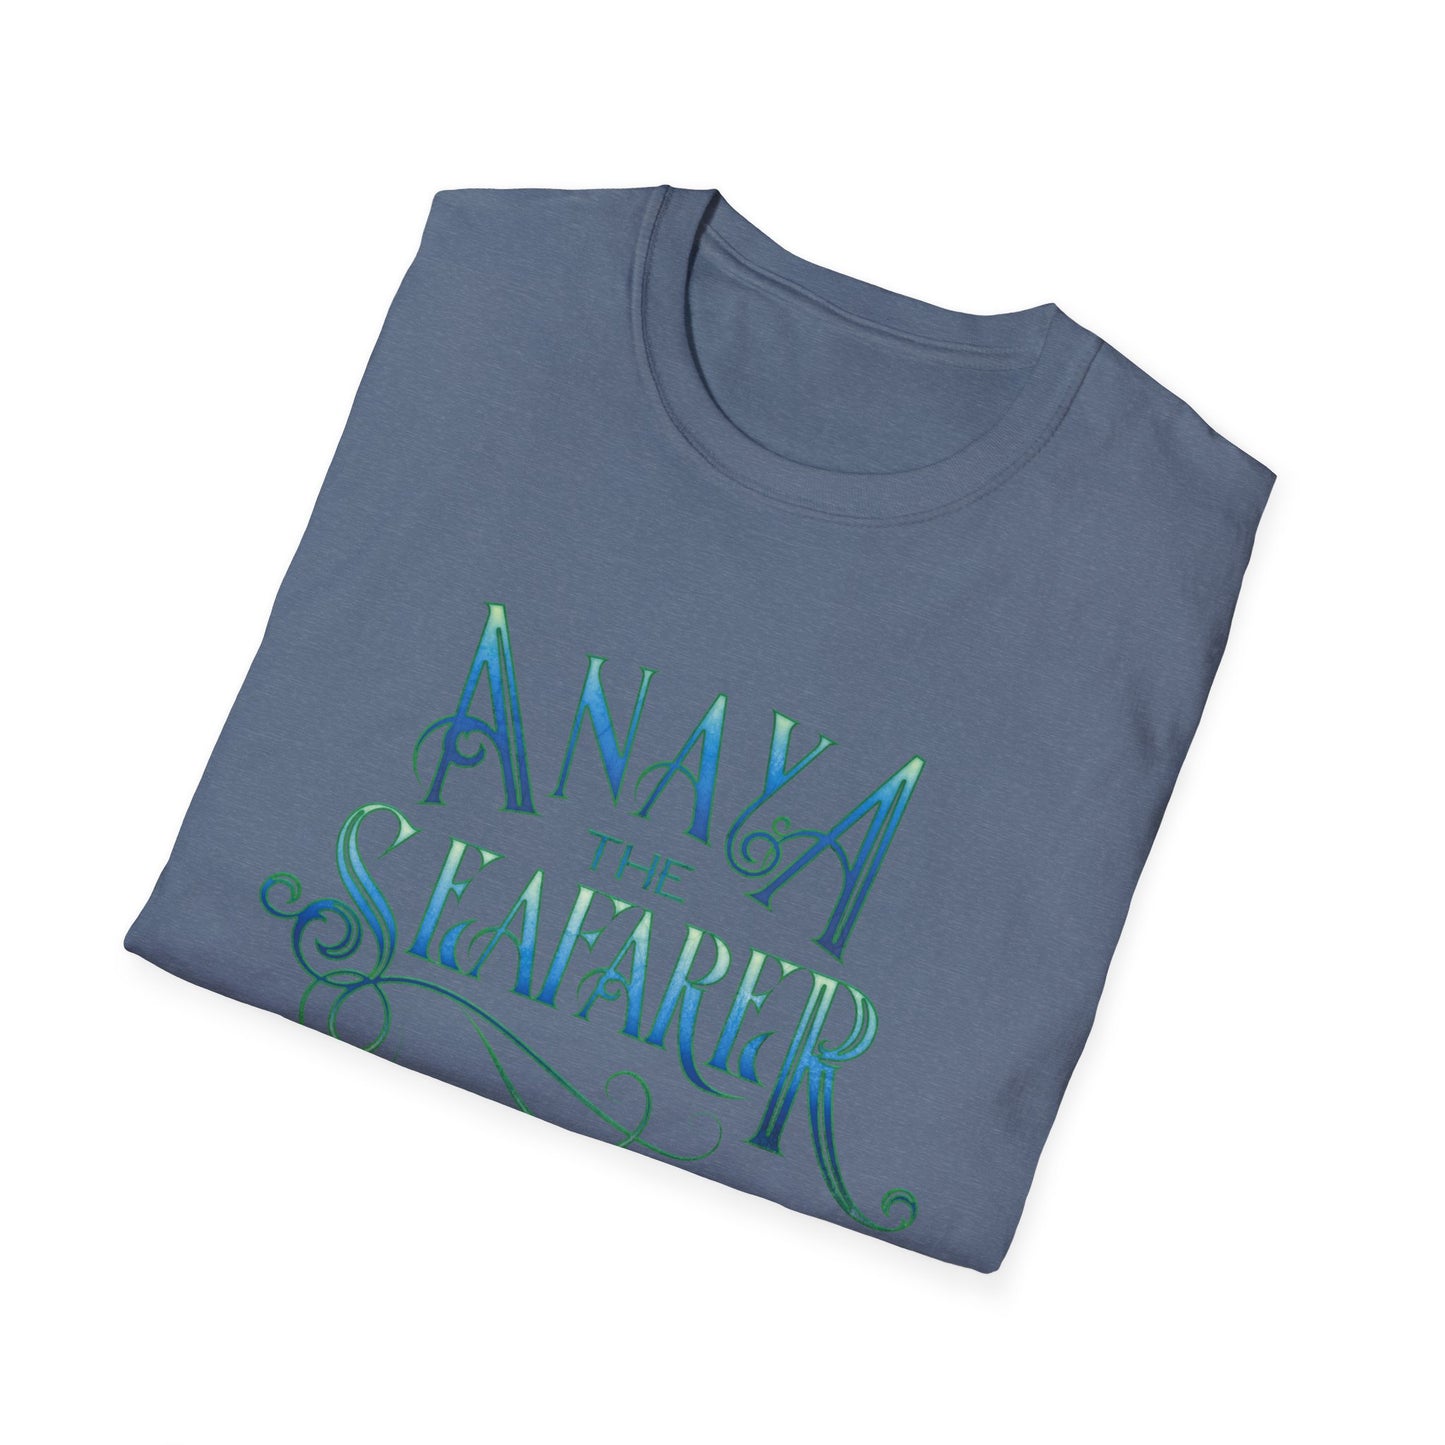 Anaya the Seafarer T-Shirt